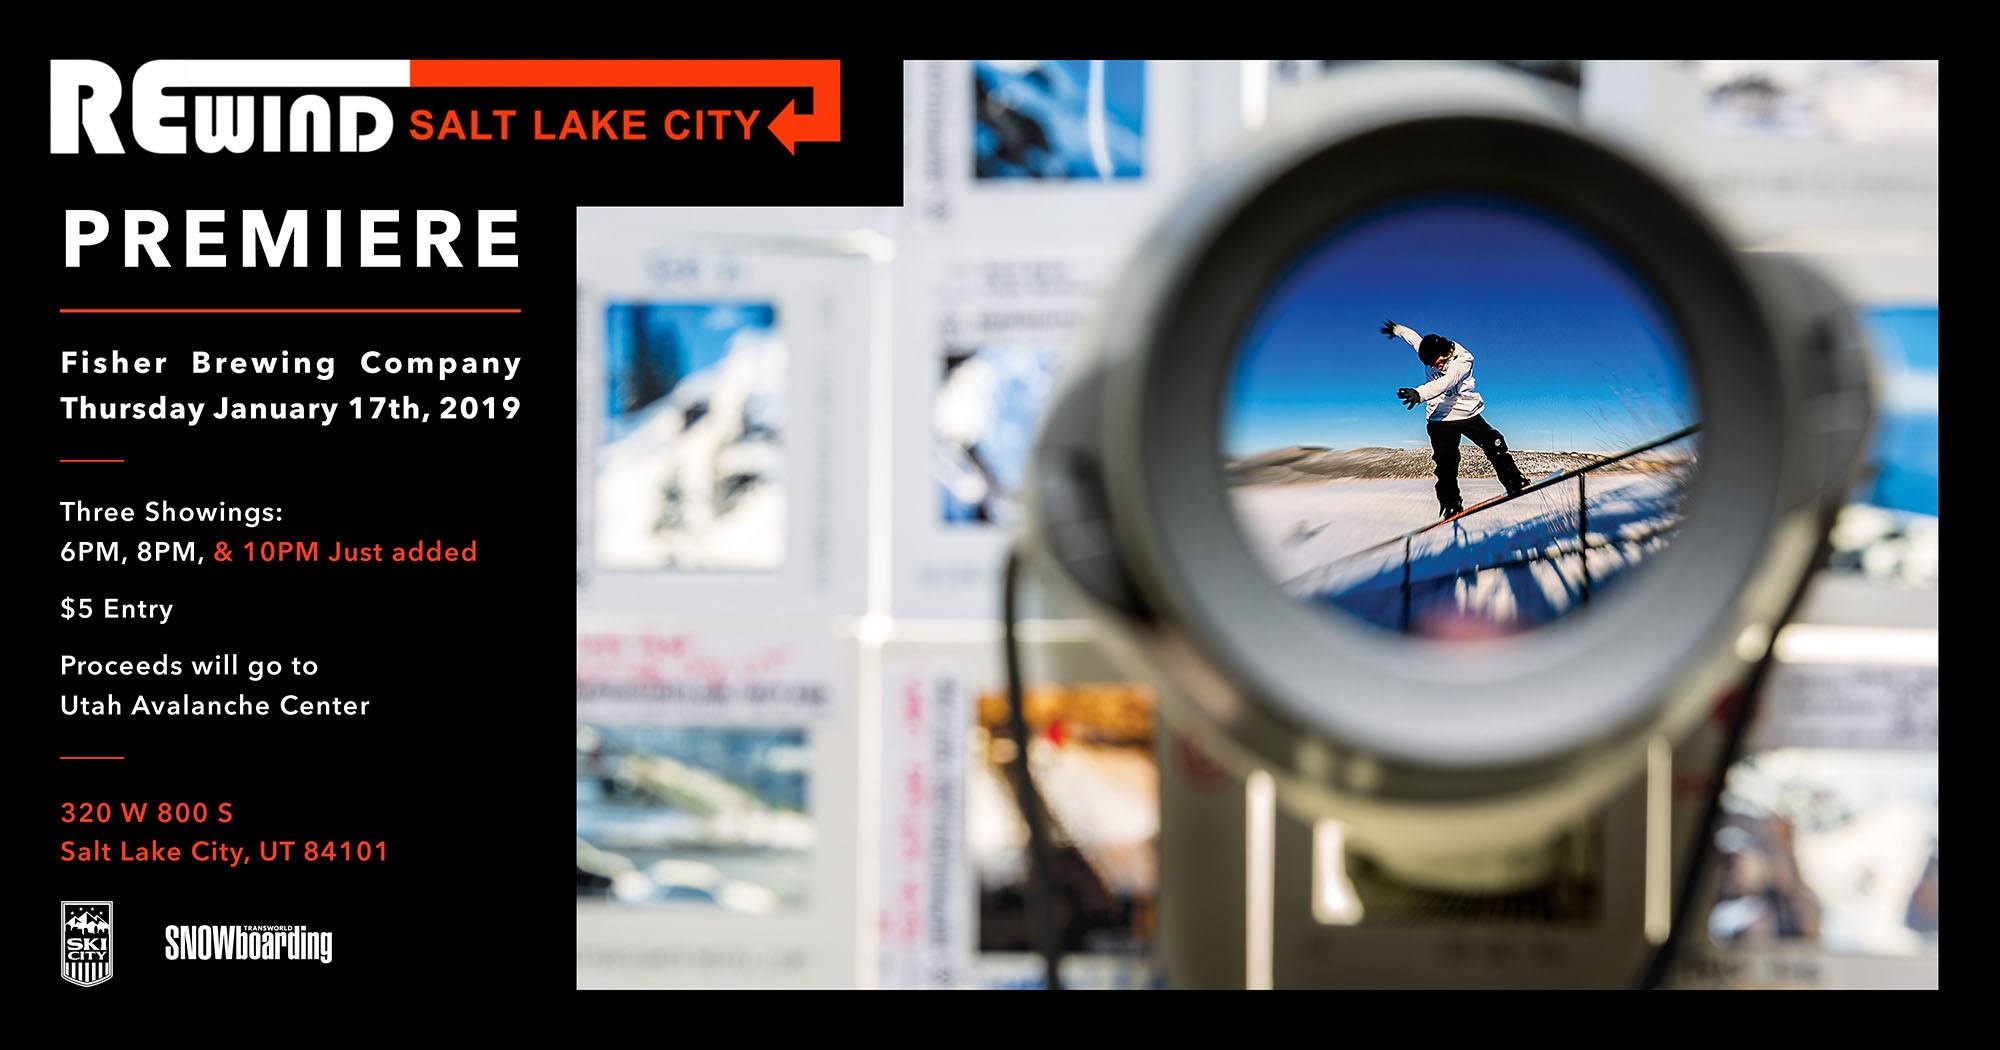 Rewind: Salt Lake City